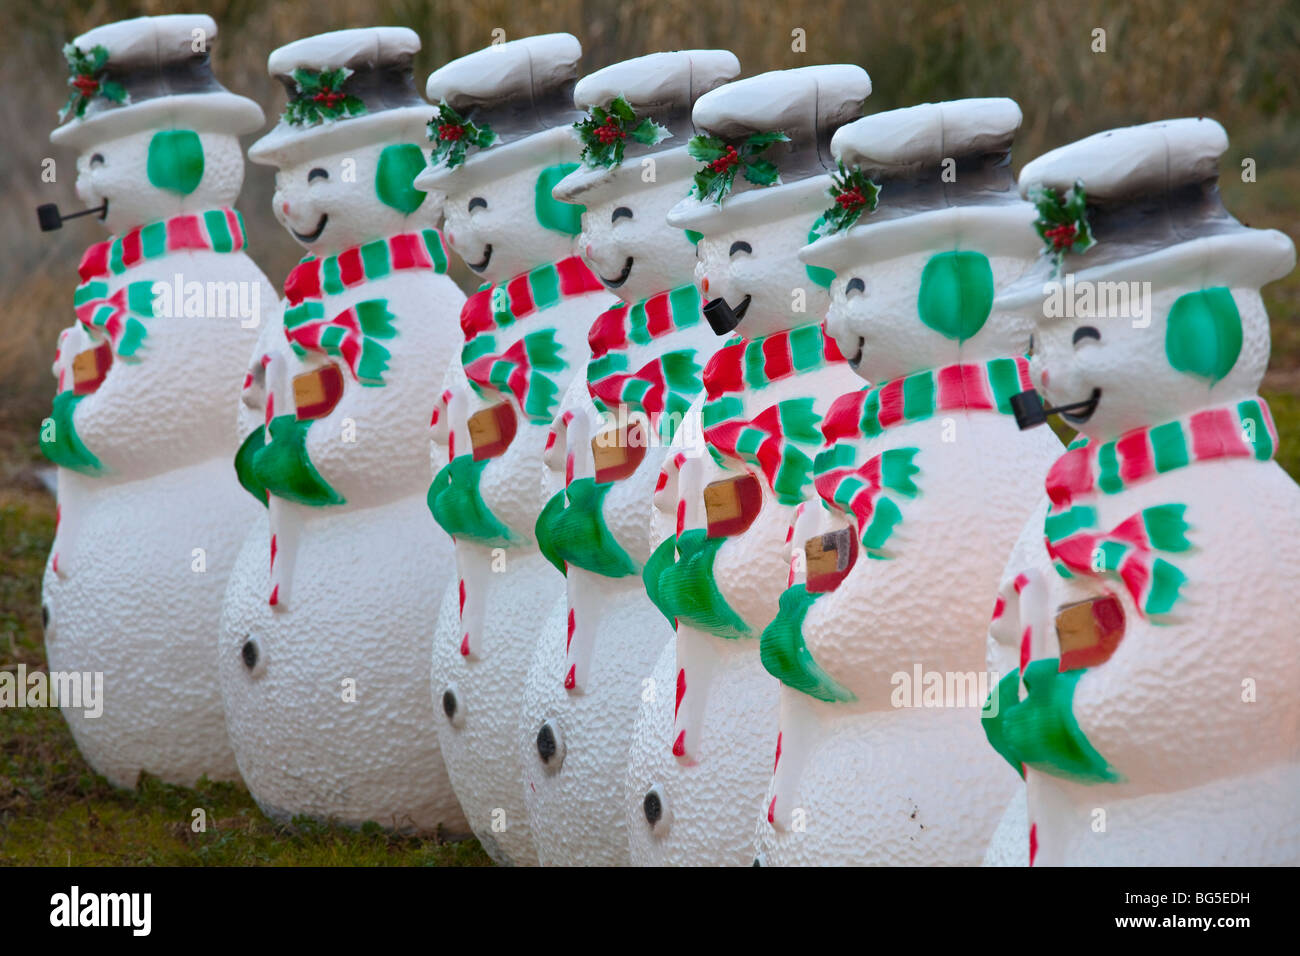 Snowmen on parade at CornerStone garden and sculpture center in Sonoma,  California, USA Stock Photo - Alamy